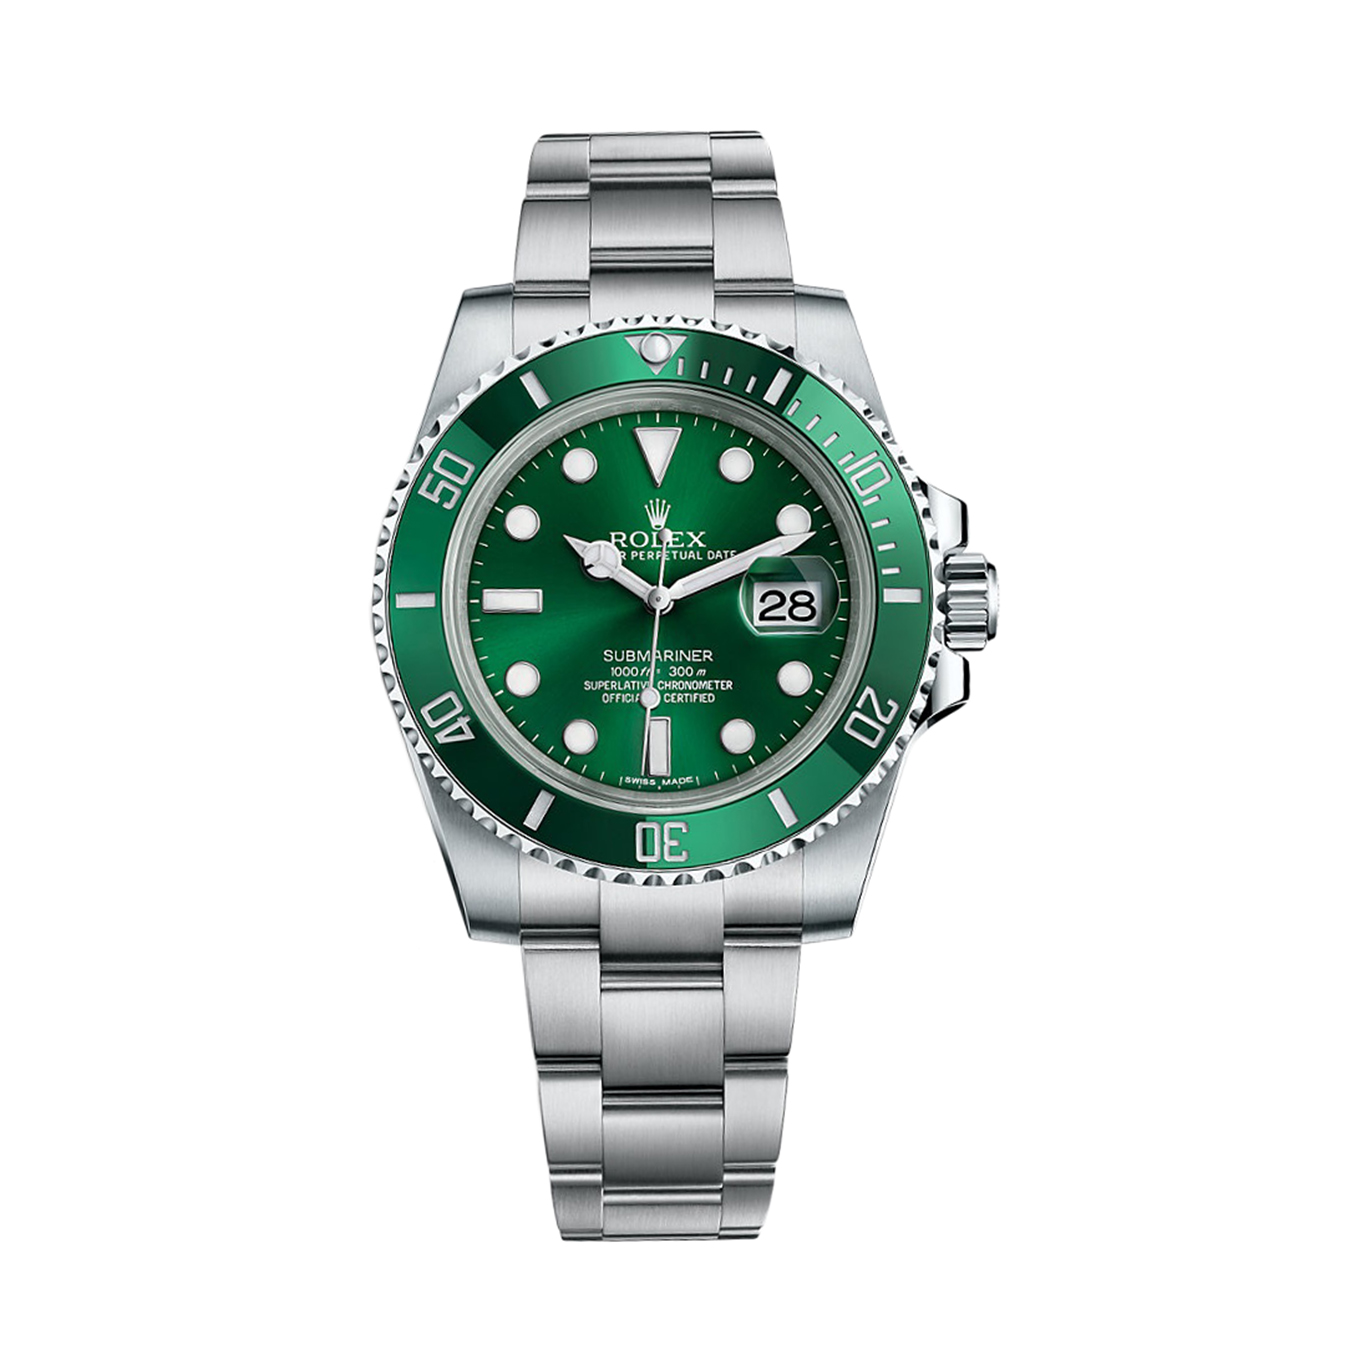 Submariner 116610LV Stainless Steel Watch (Green)